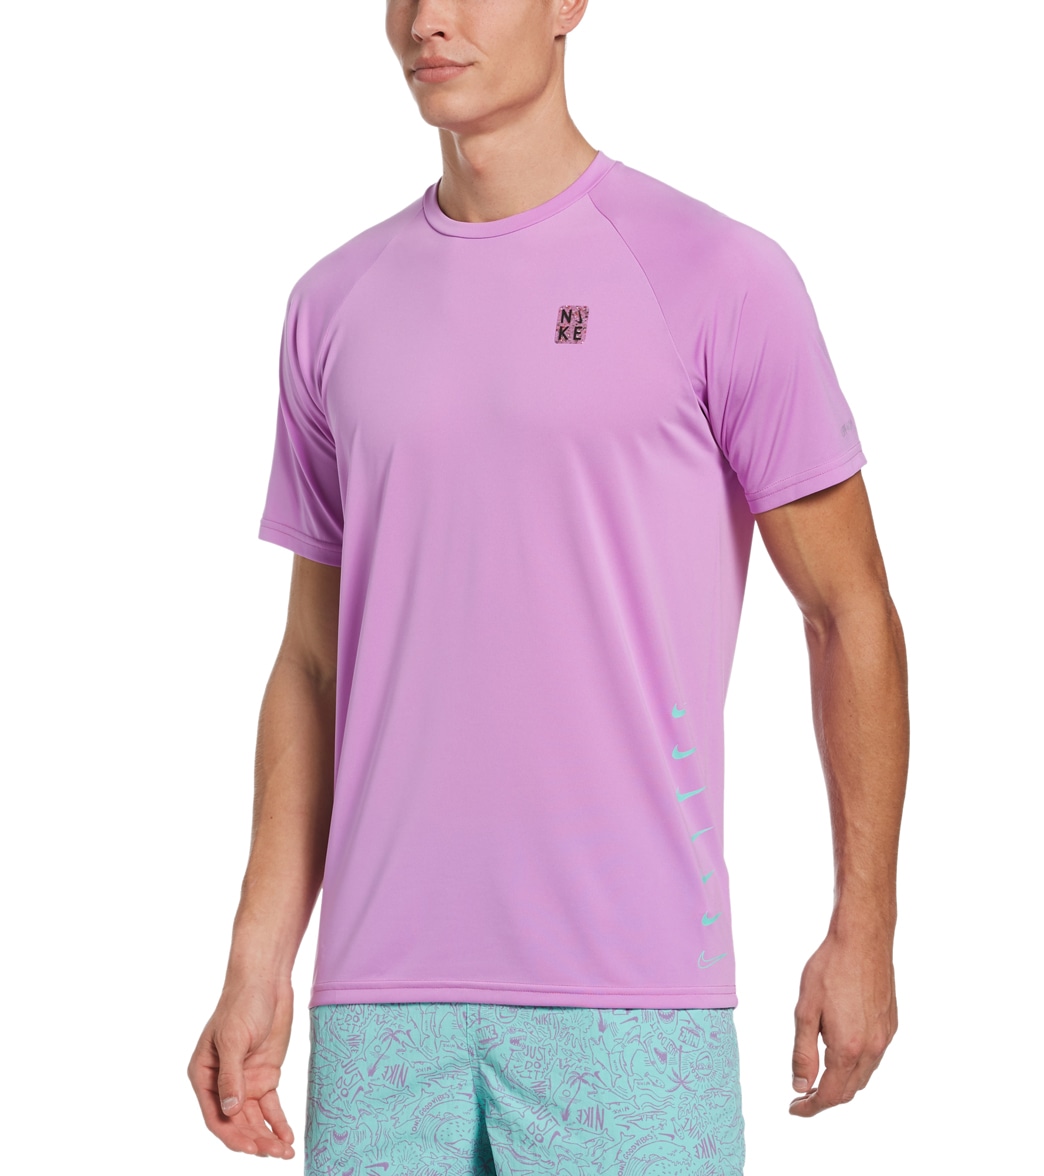 Nike Men's Multi Swoosh Short Sleeve Hydro Rashguard Shirt - Fuchsia Glow Medium - Swimoutlet.com